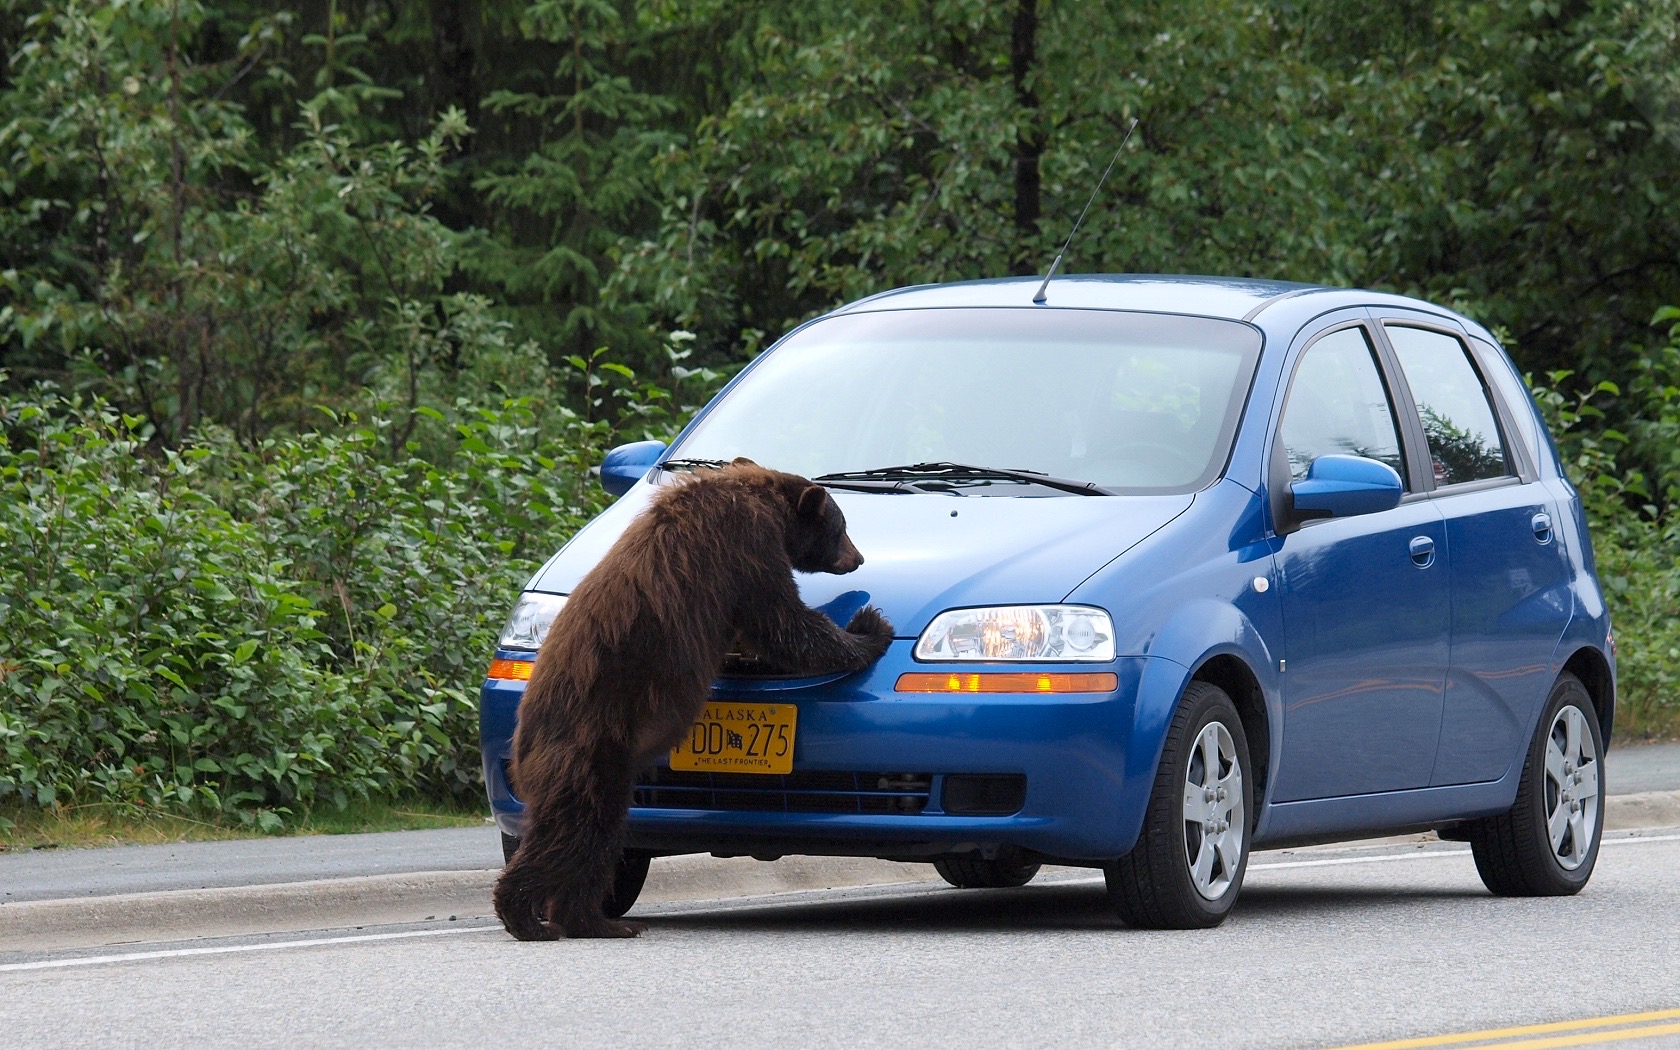 Traffic Bear